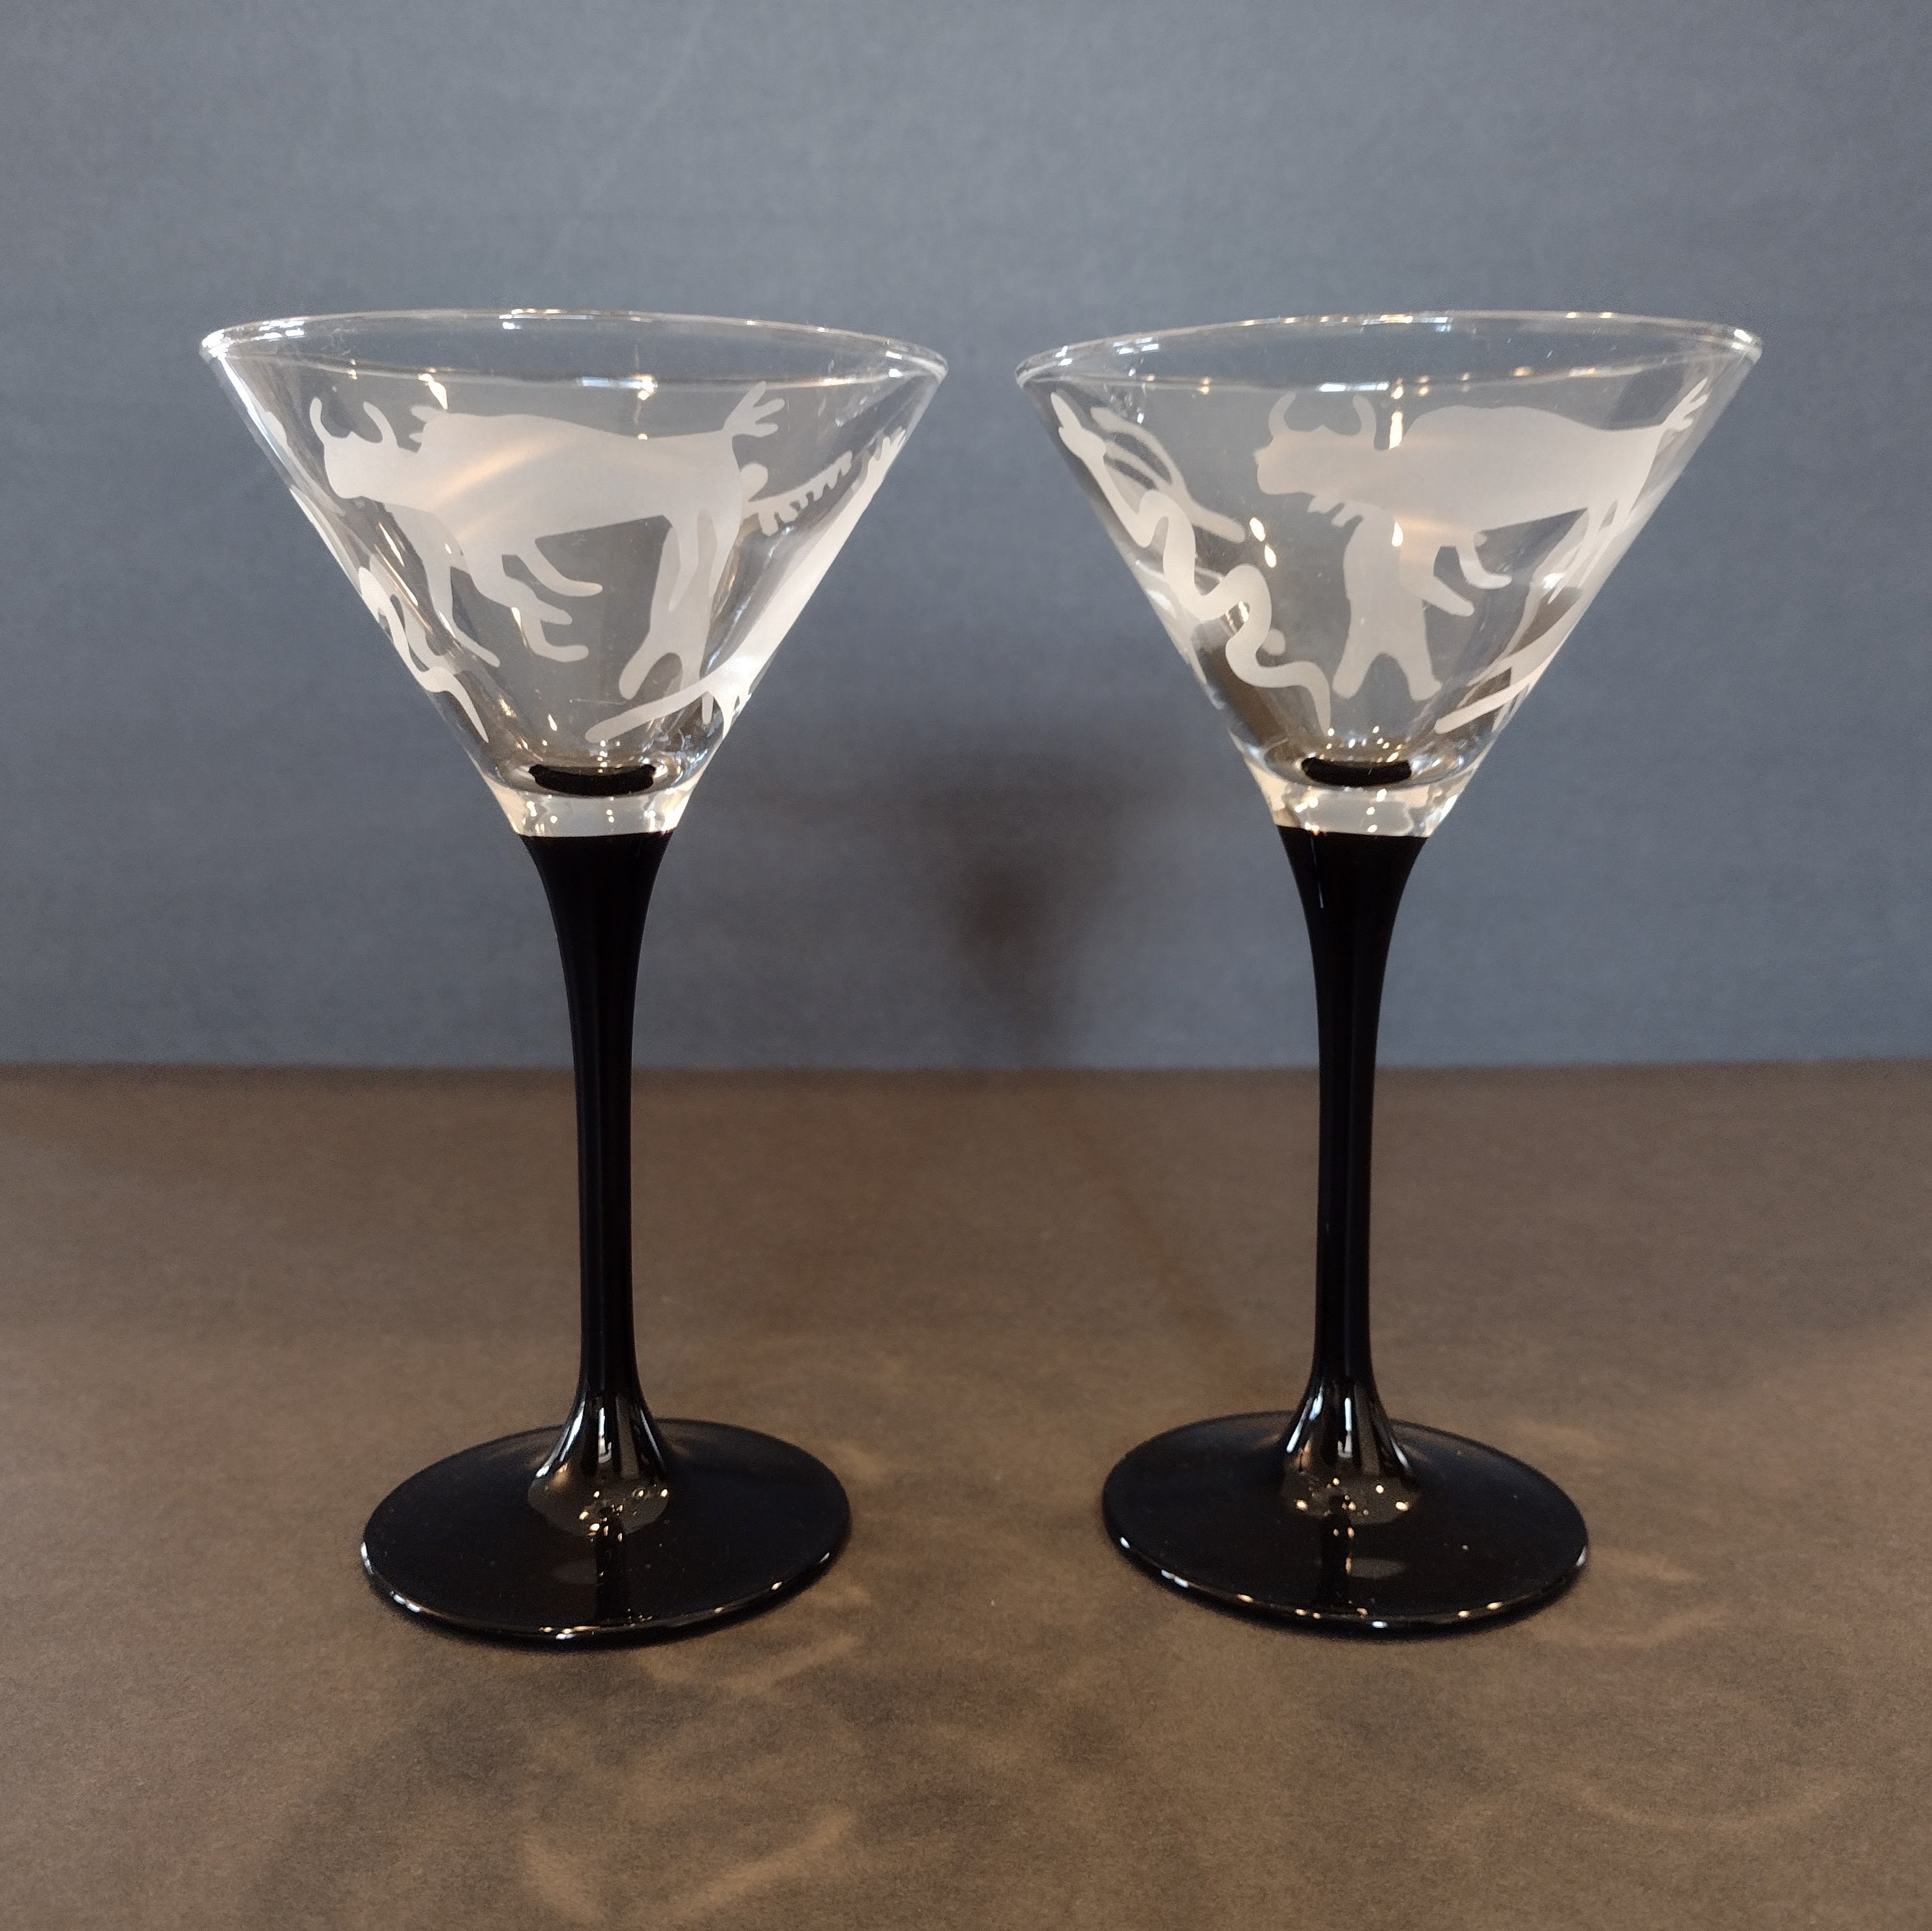 Beautiful Set of 6 Six French Vintage Luminarc Martini Glasses Black Stem  Cocktail Glass 